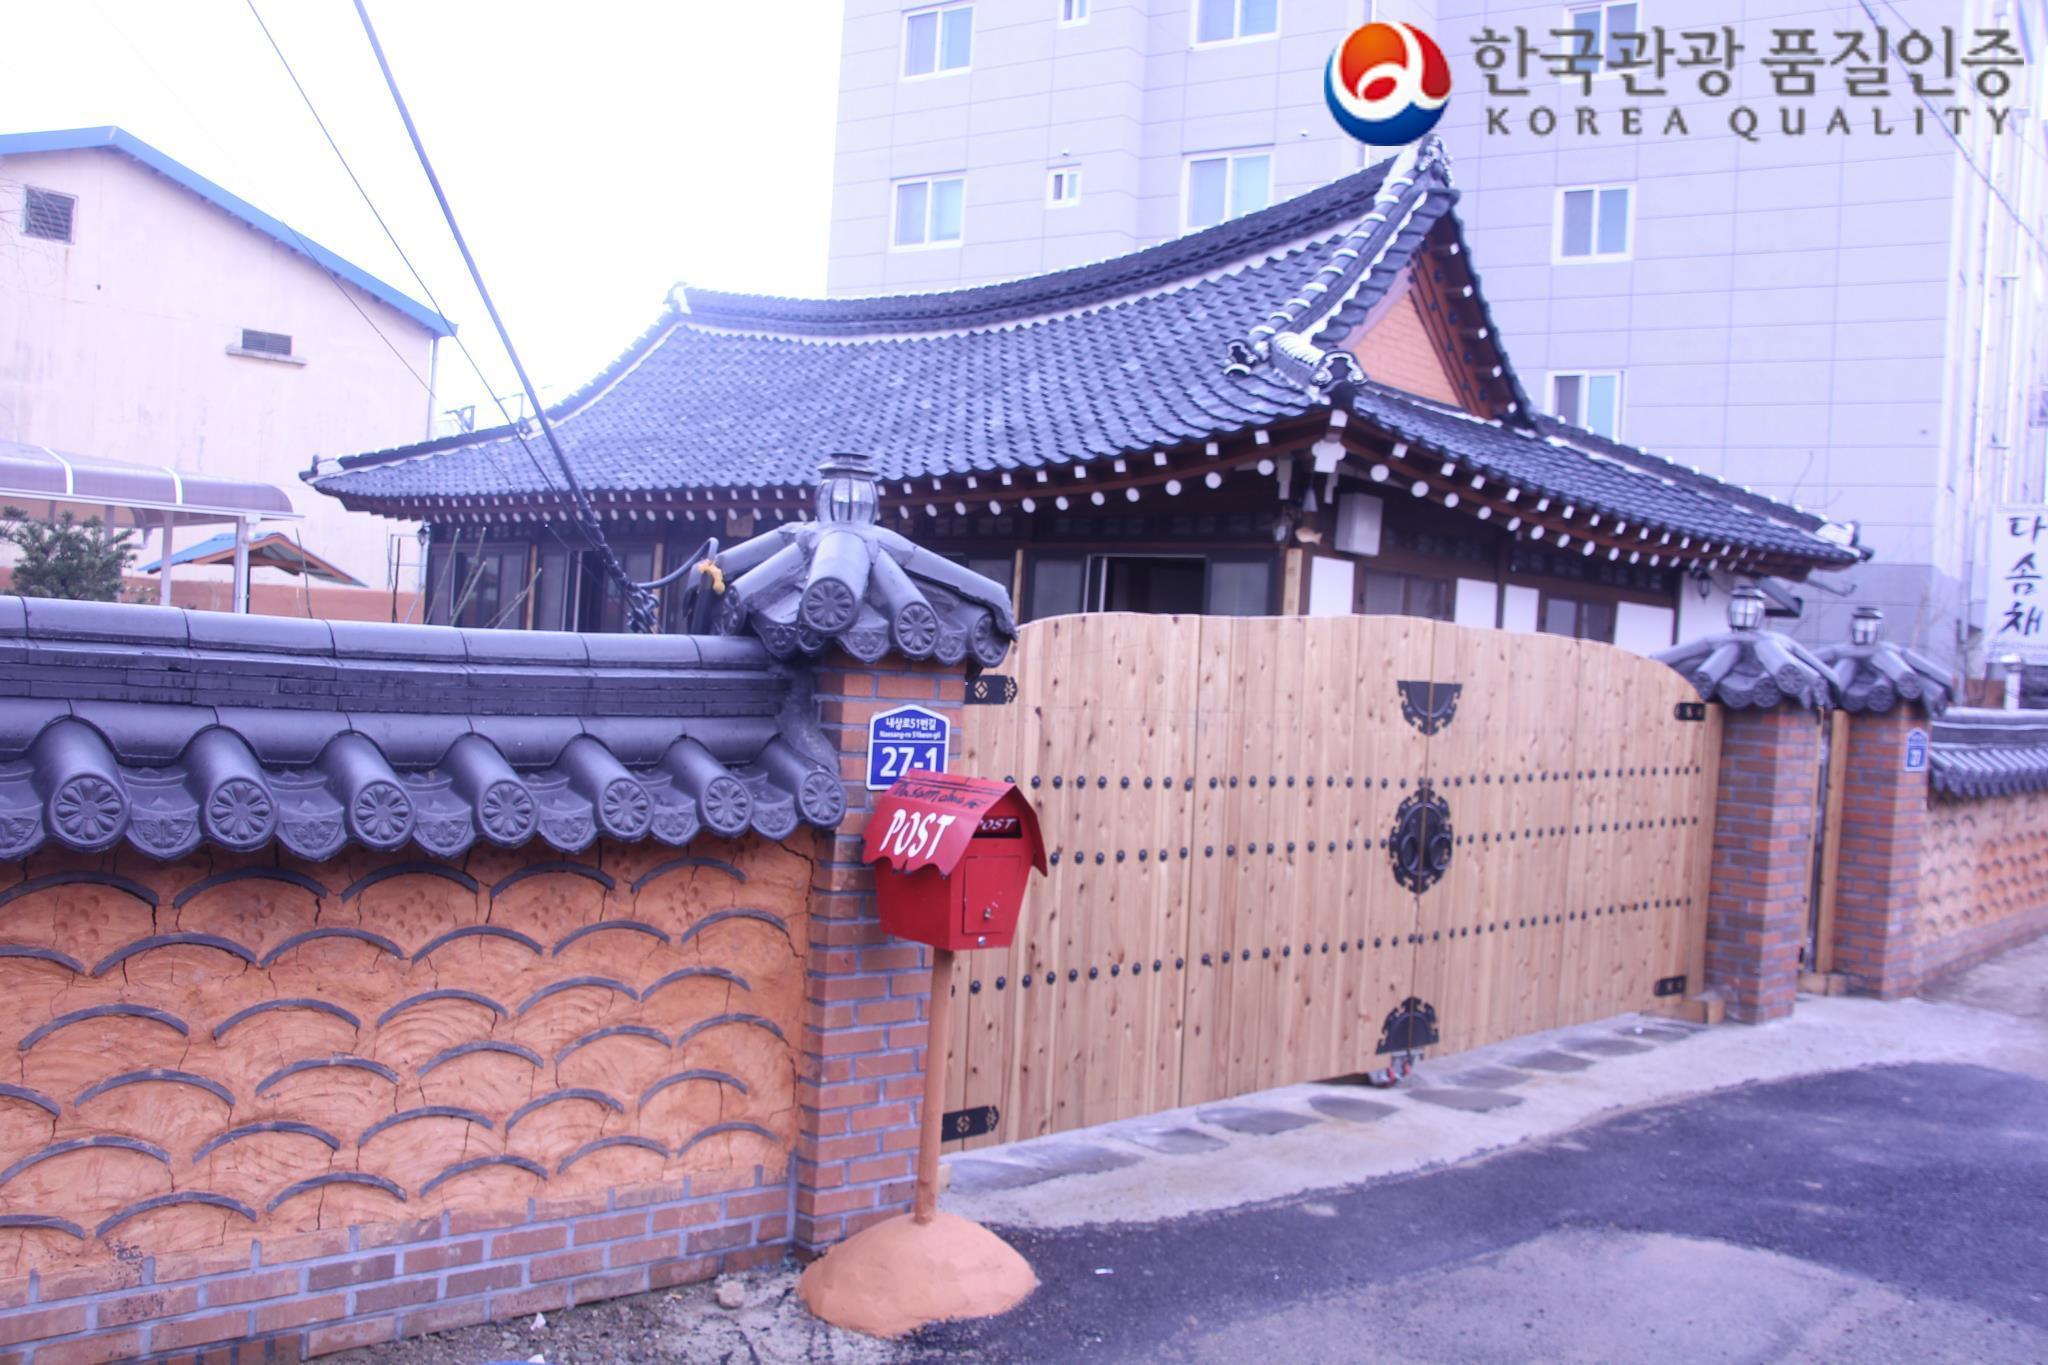 Dasomchae Hanok Stay (Korea Quality) - Gwangju